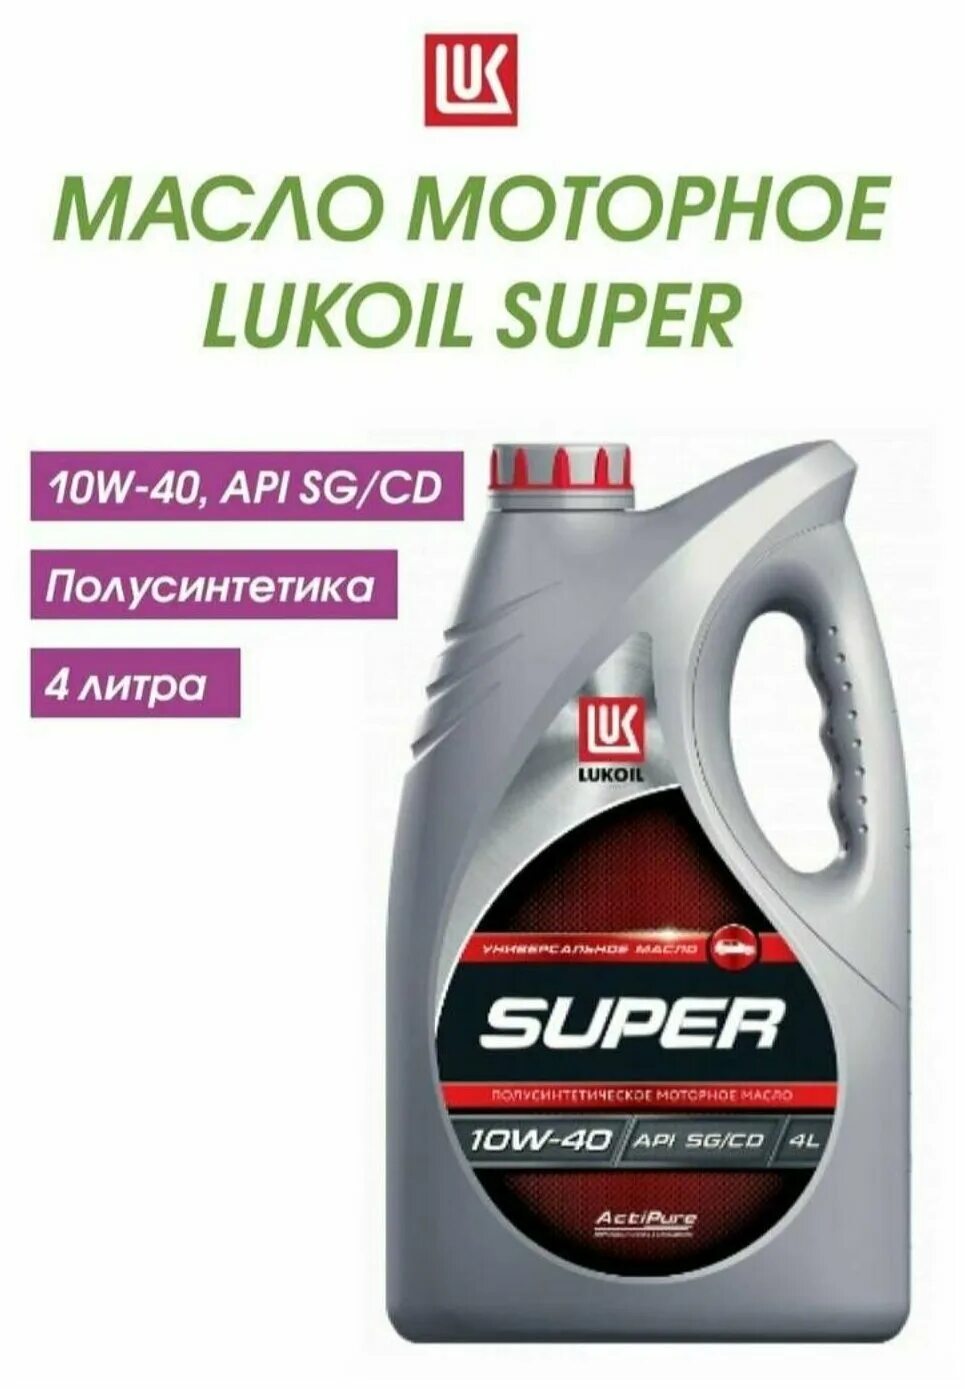 Масло лукойл 10w 40 4л. Масло моторное Лукойл 10w-40 super. Lukoil super 5w-40. Моторное масло Лукойл (Lukoil) 5w-40 полусинтетическое 4 л. Масло Лукойл супер 10w 40 полусинтетика.